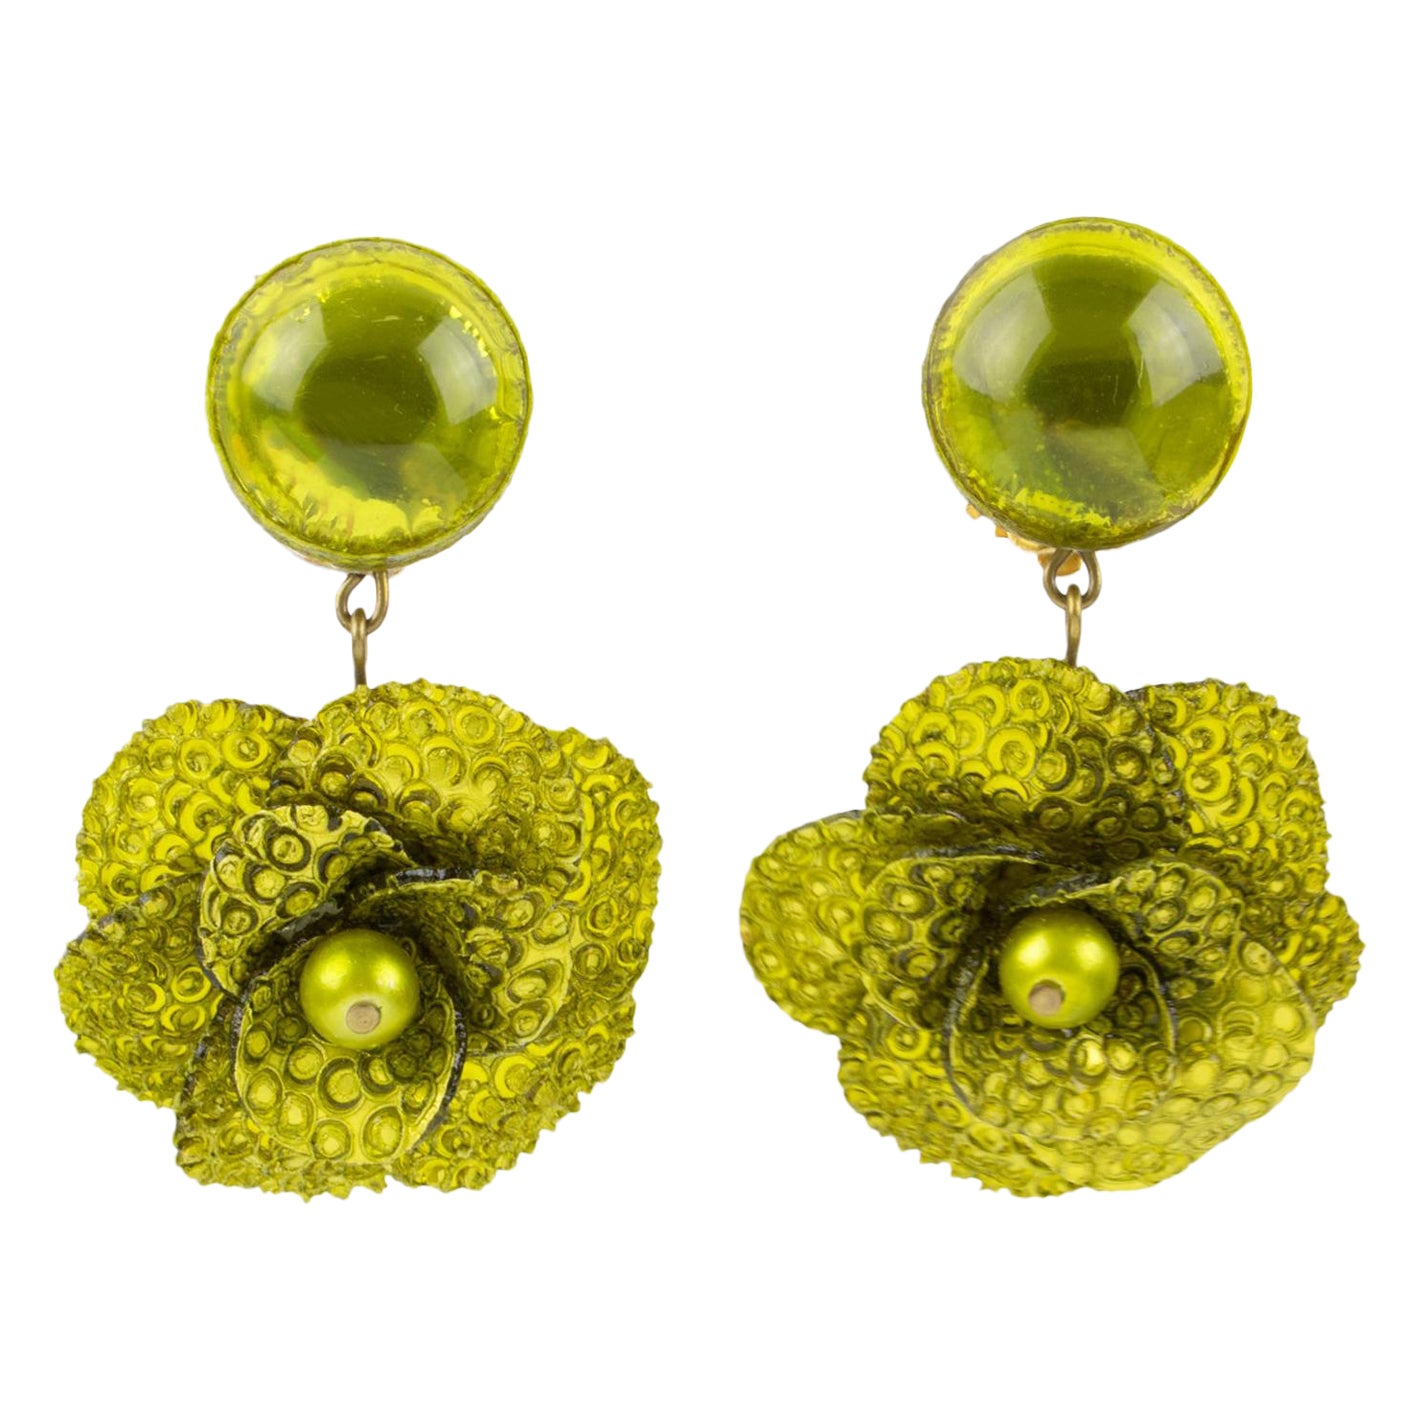 Francoise Montague by Cilea Resin Clip Earrings Green Poppy Flower For Sale